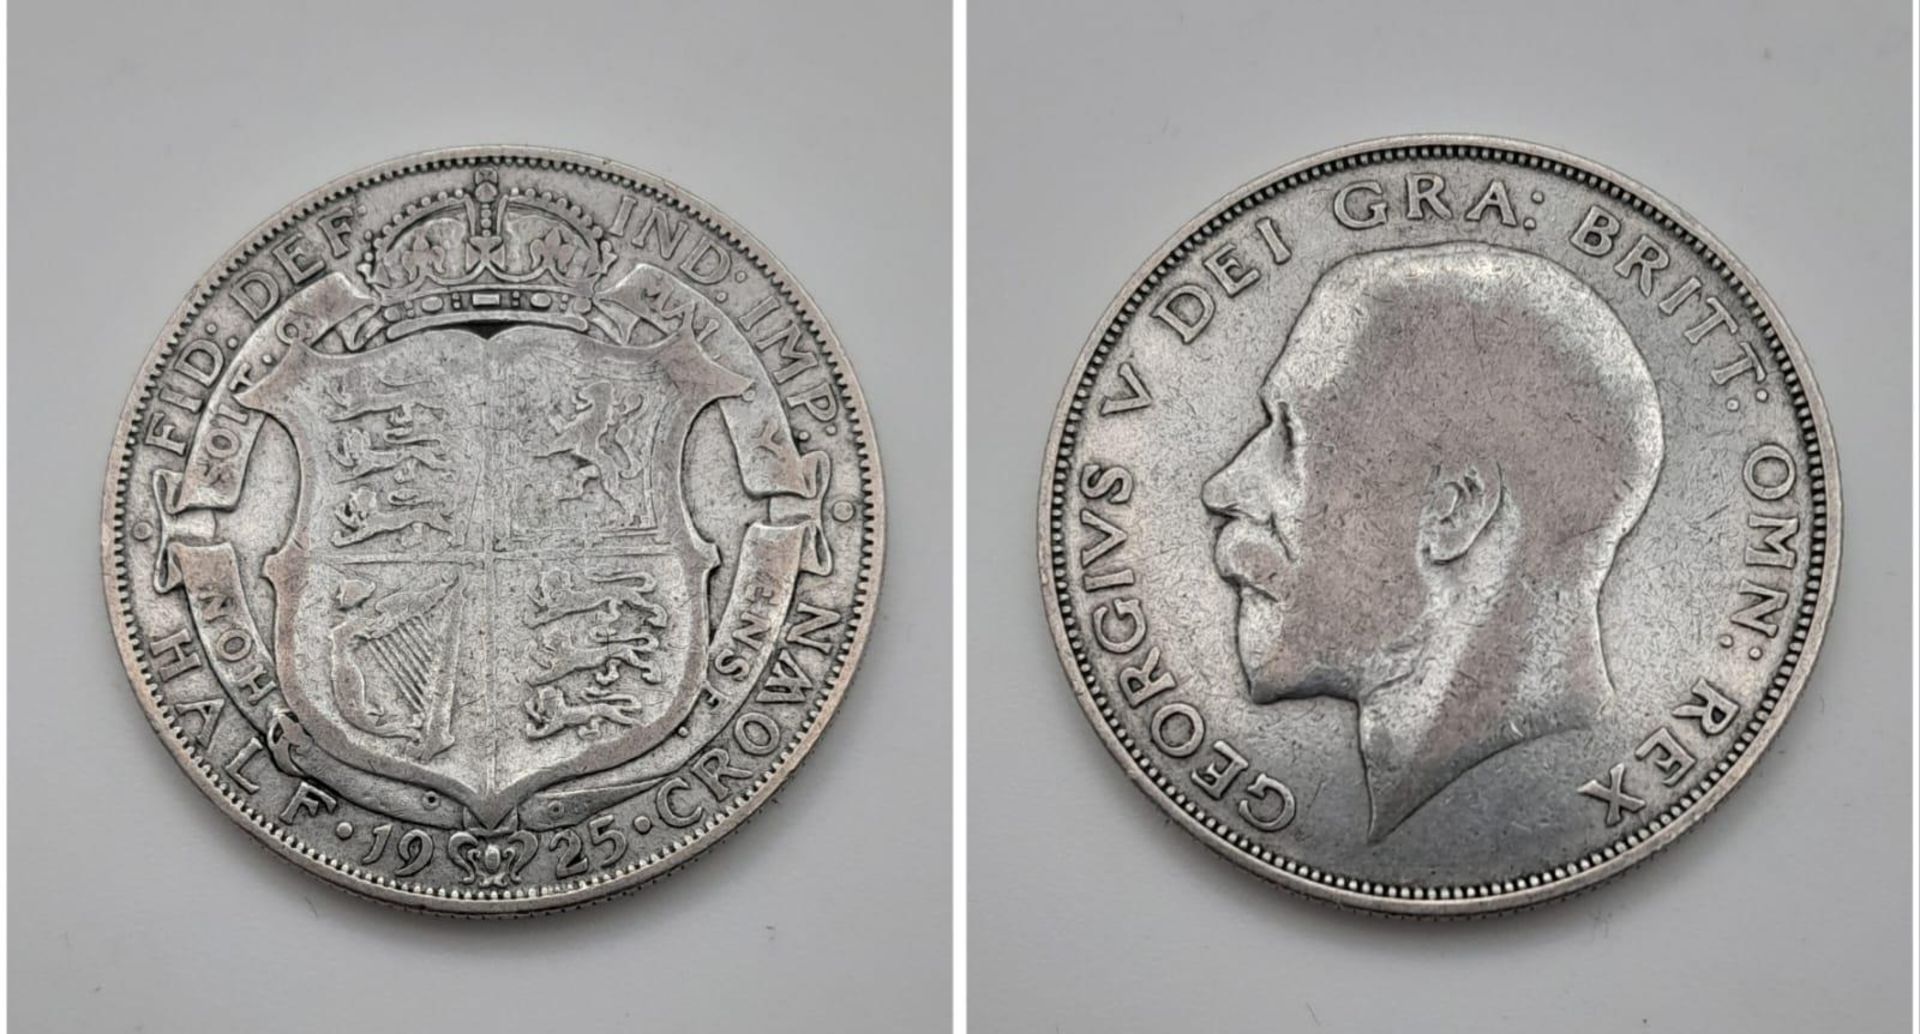 A 1925 Scarce George V Silver Half Crown Coin. VF grade but please see photos.